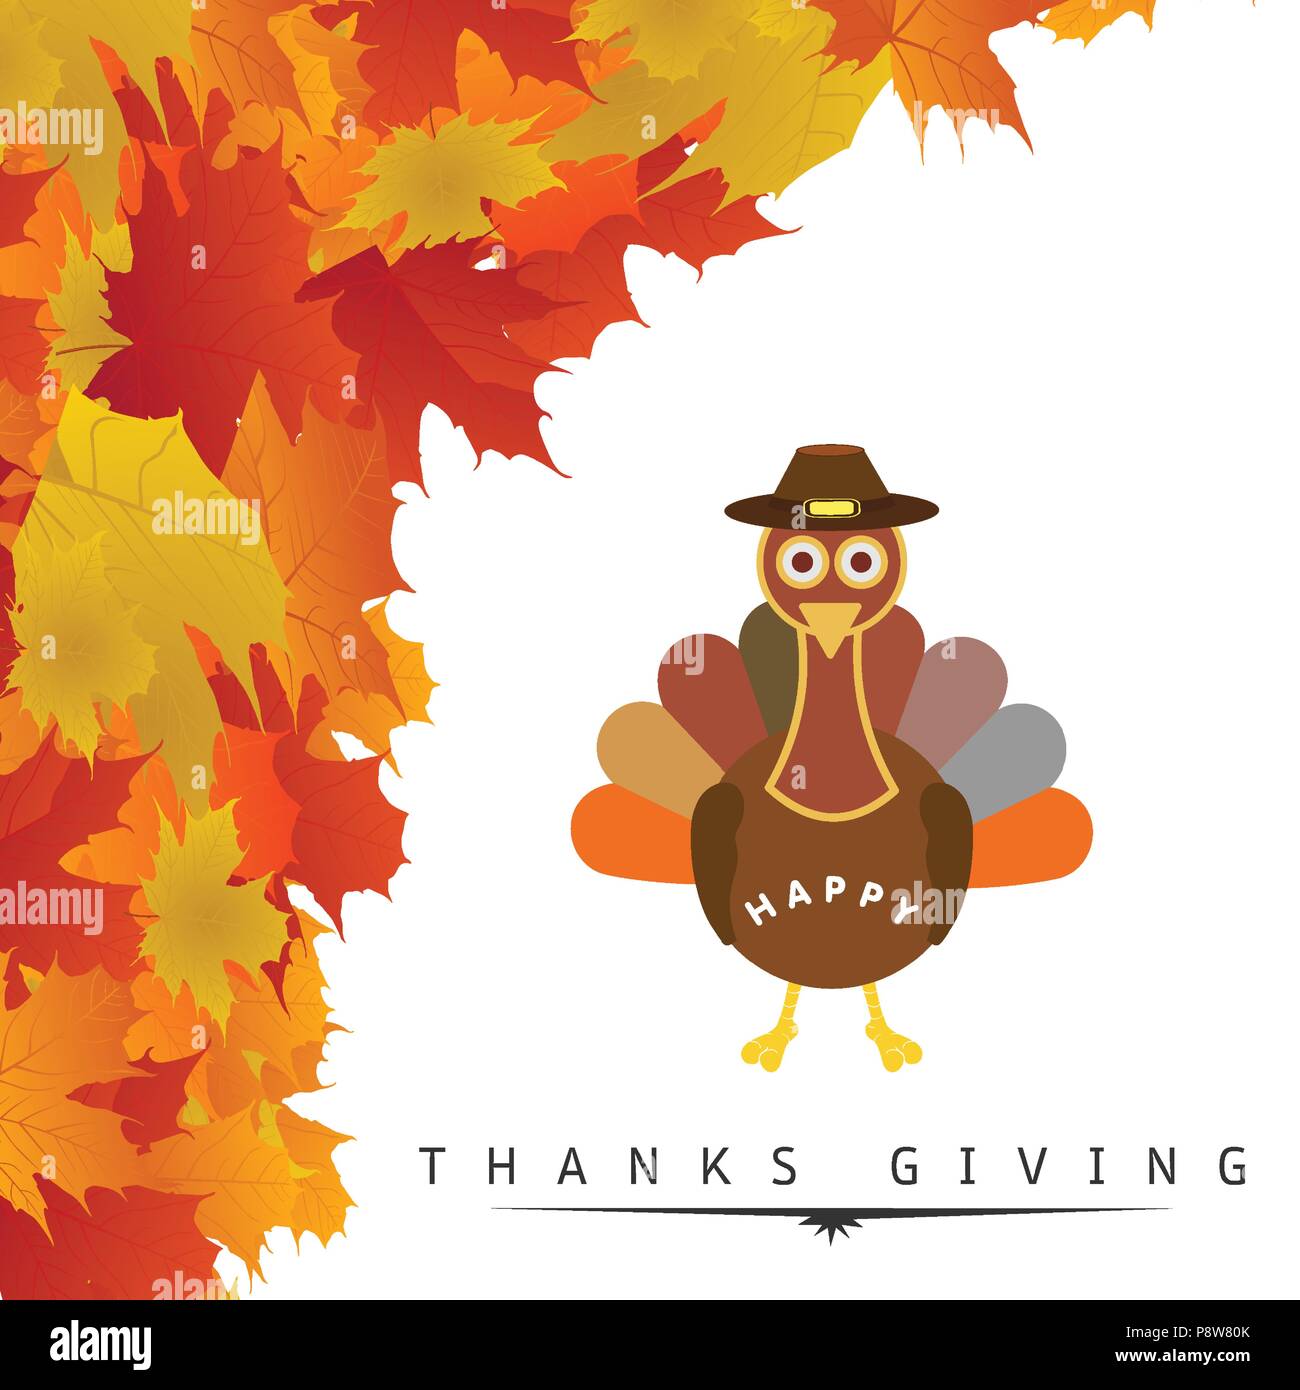 Happy Thanksgiving Day – creativeusarts